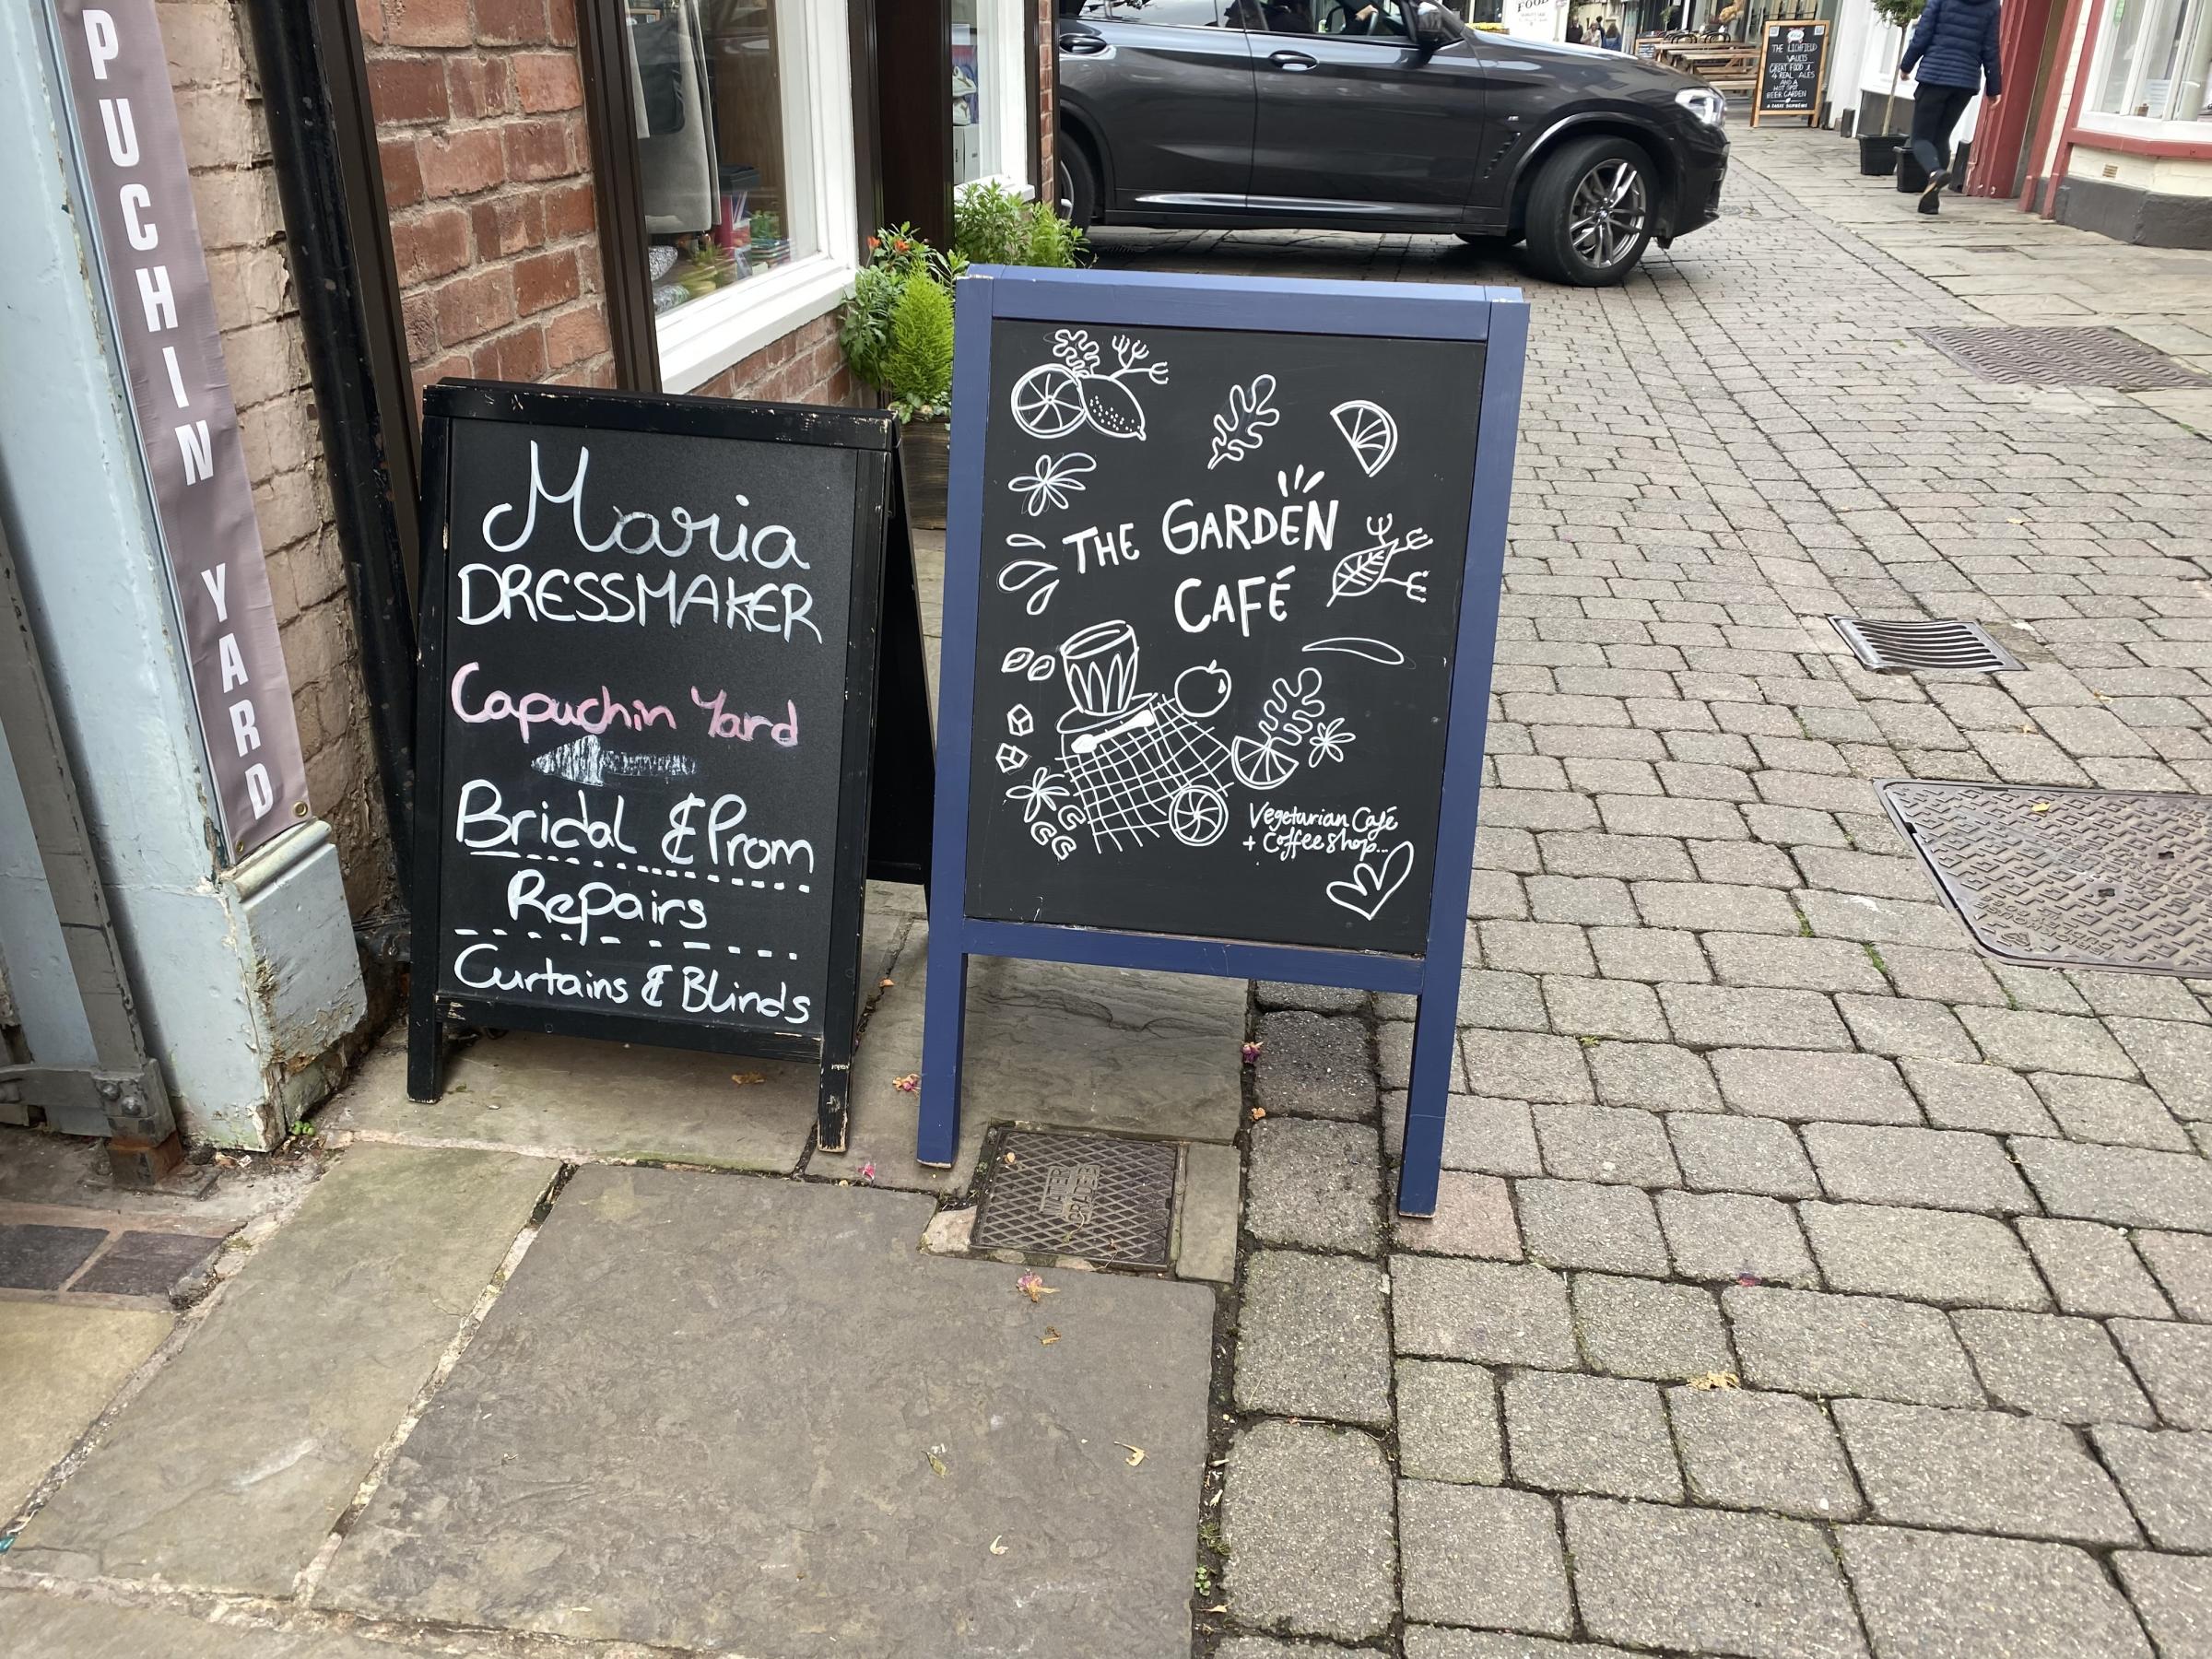 The Garden Cafe sign in Church Street